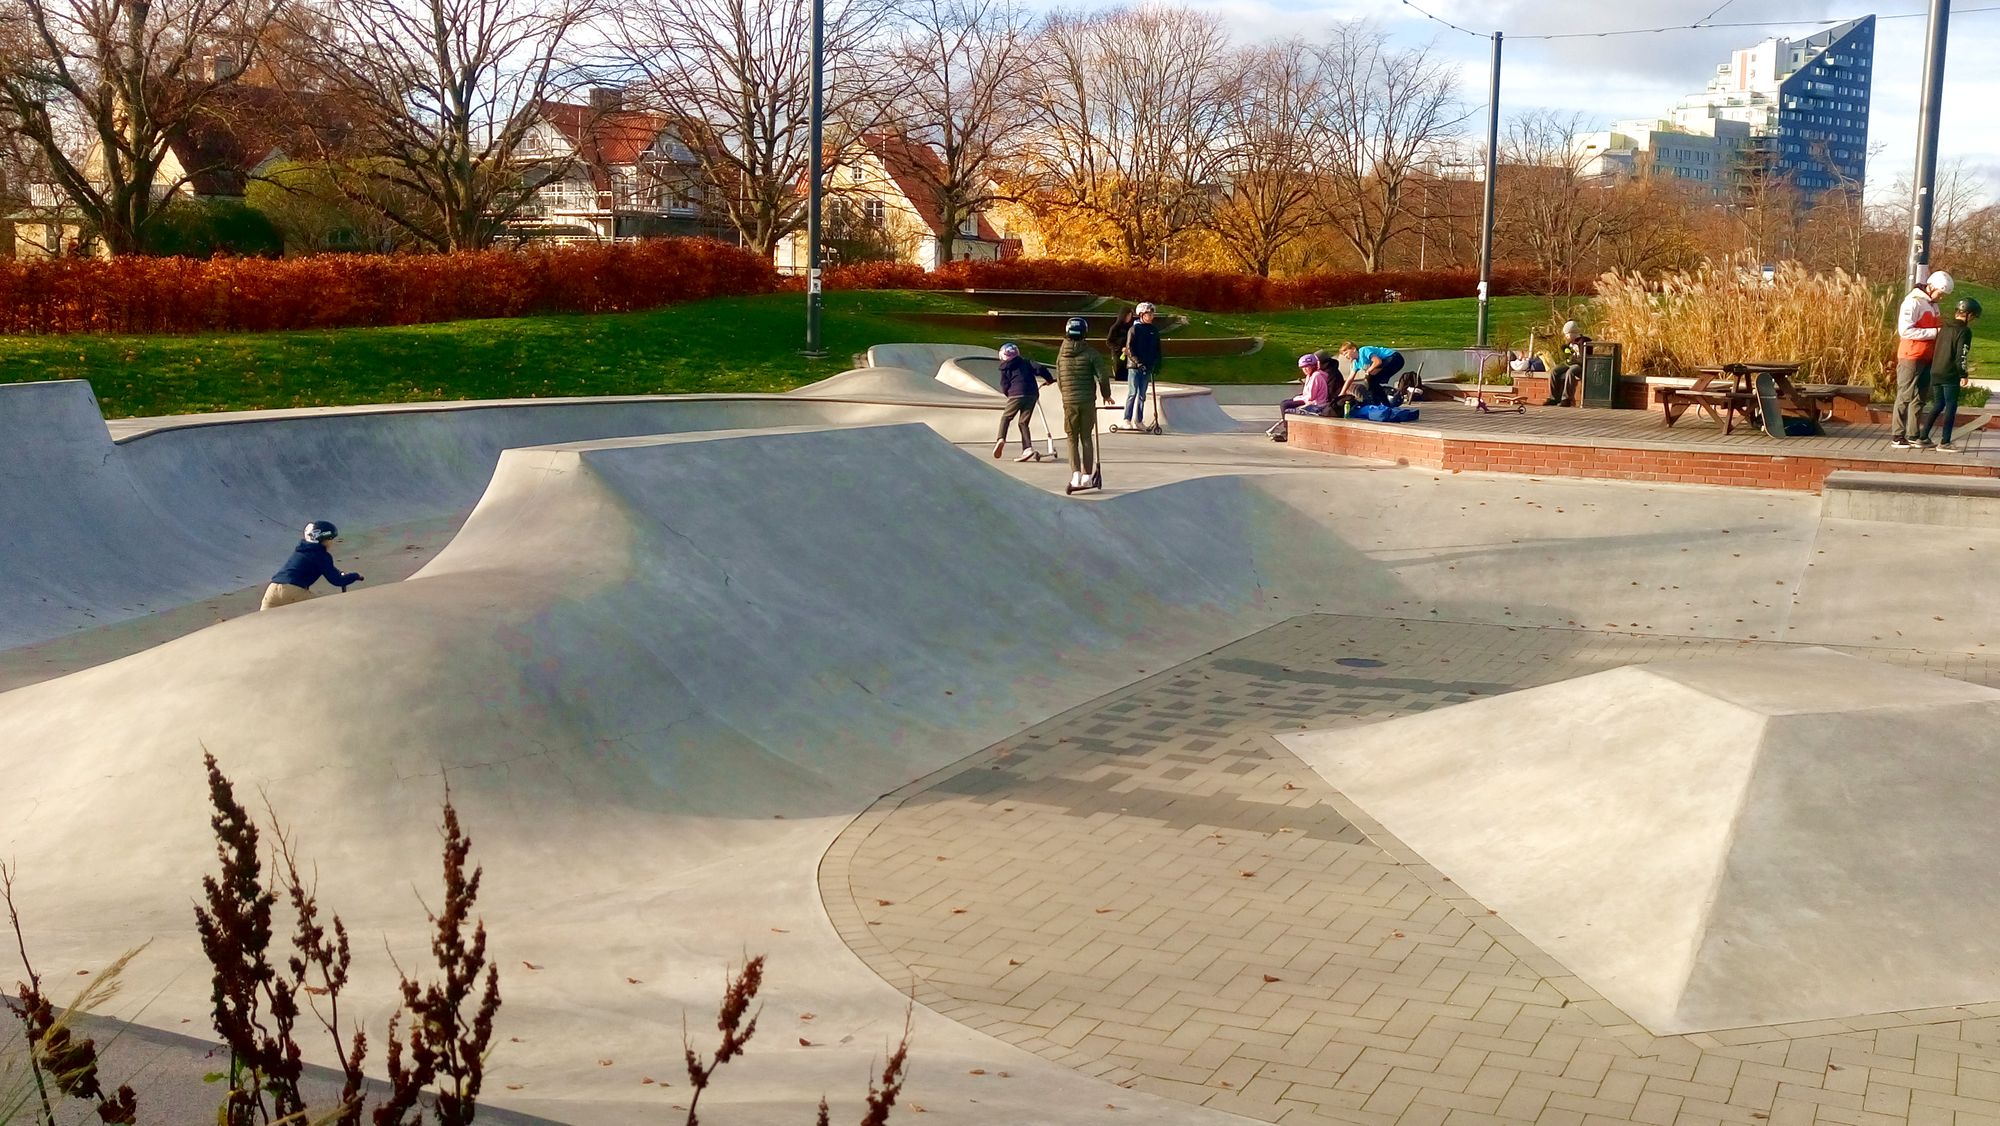 Söderlyckans skateboardpark, Lund